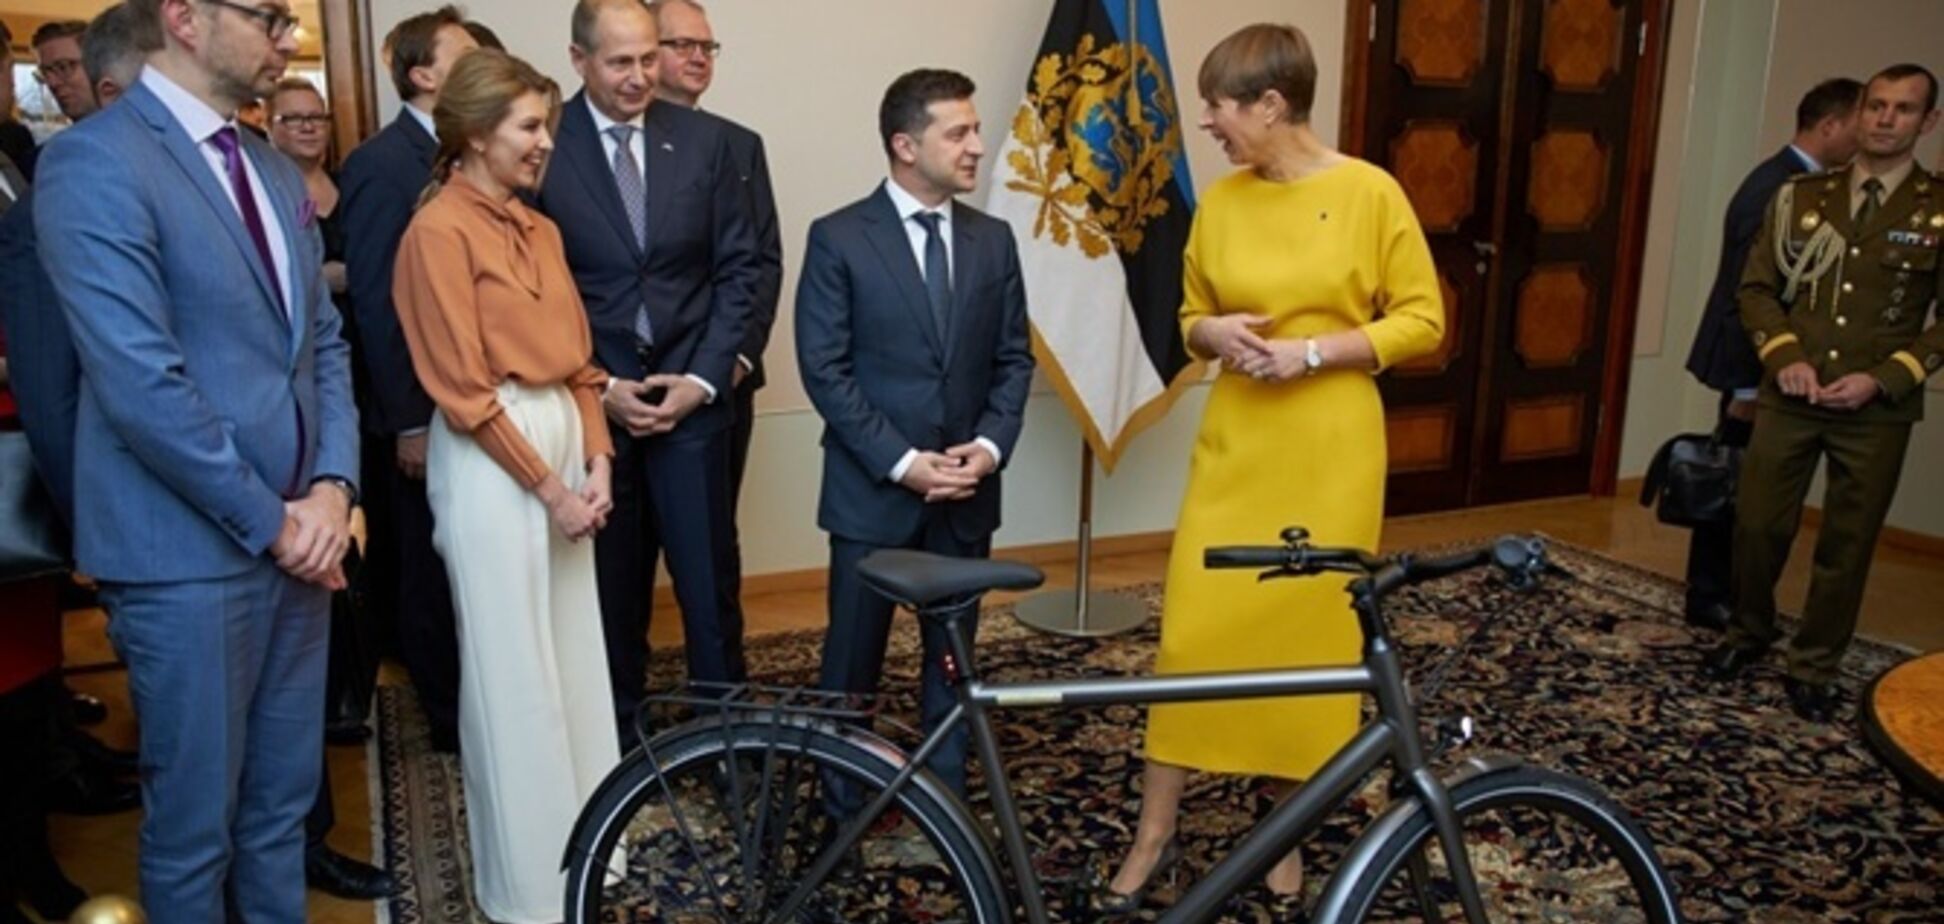 Кальюлайд подарувала Зеленському велосипед